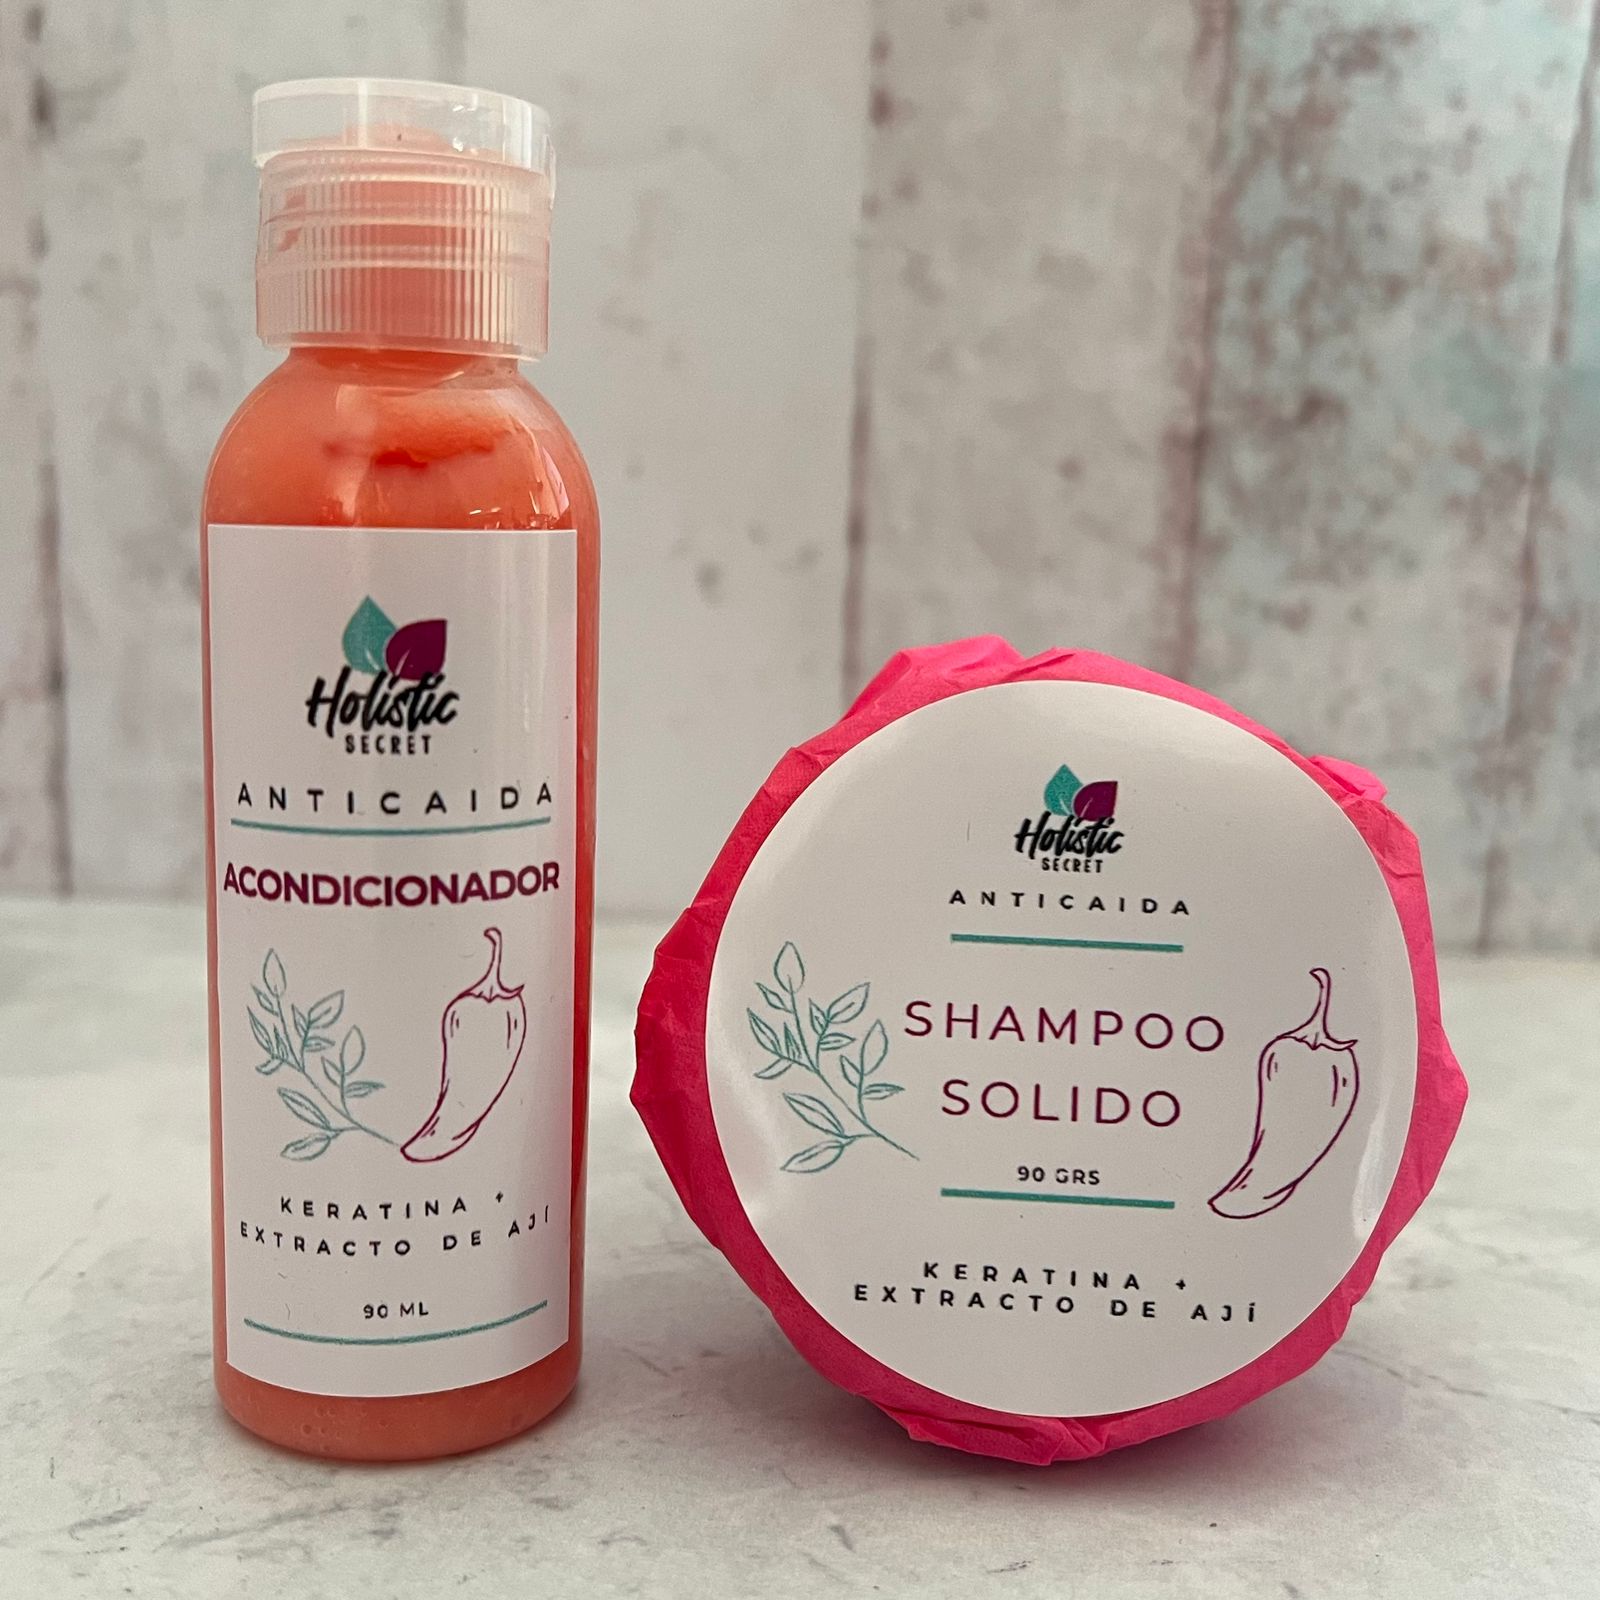 Shampoo solido Keratina + extracto de ají + regalo Holistic Secret